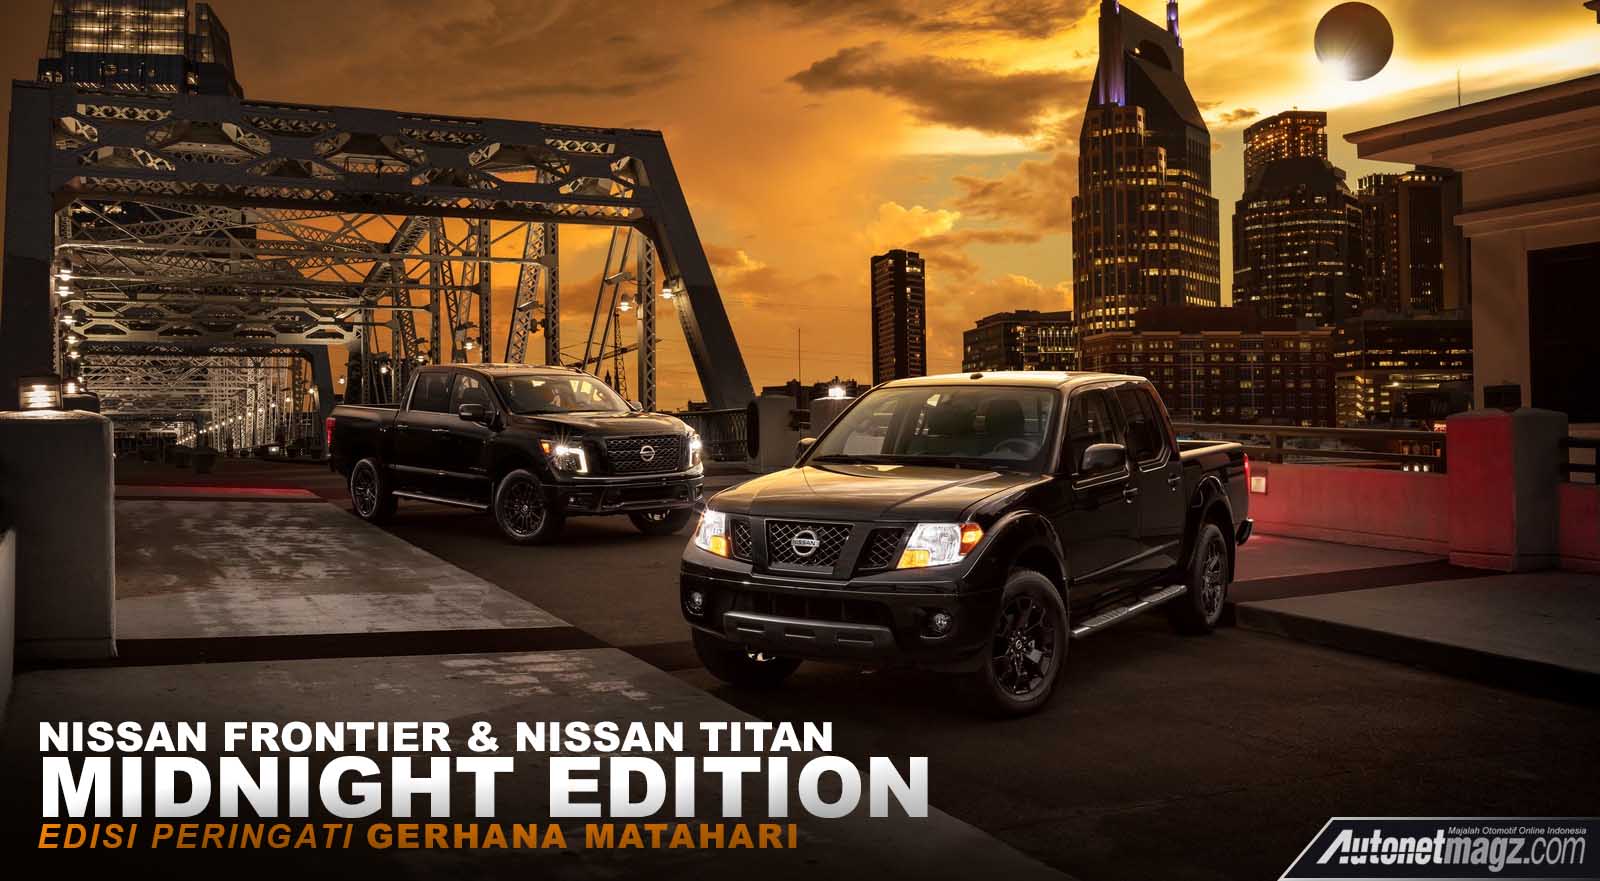 Berita, midnight edition cover: Nissan Midnight Edition Untuk Frontier, Titan, dan Titan XD